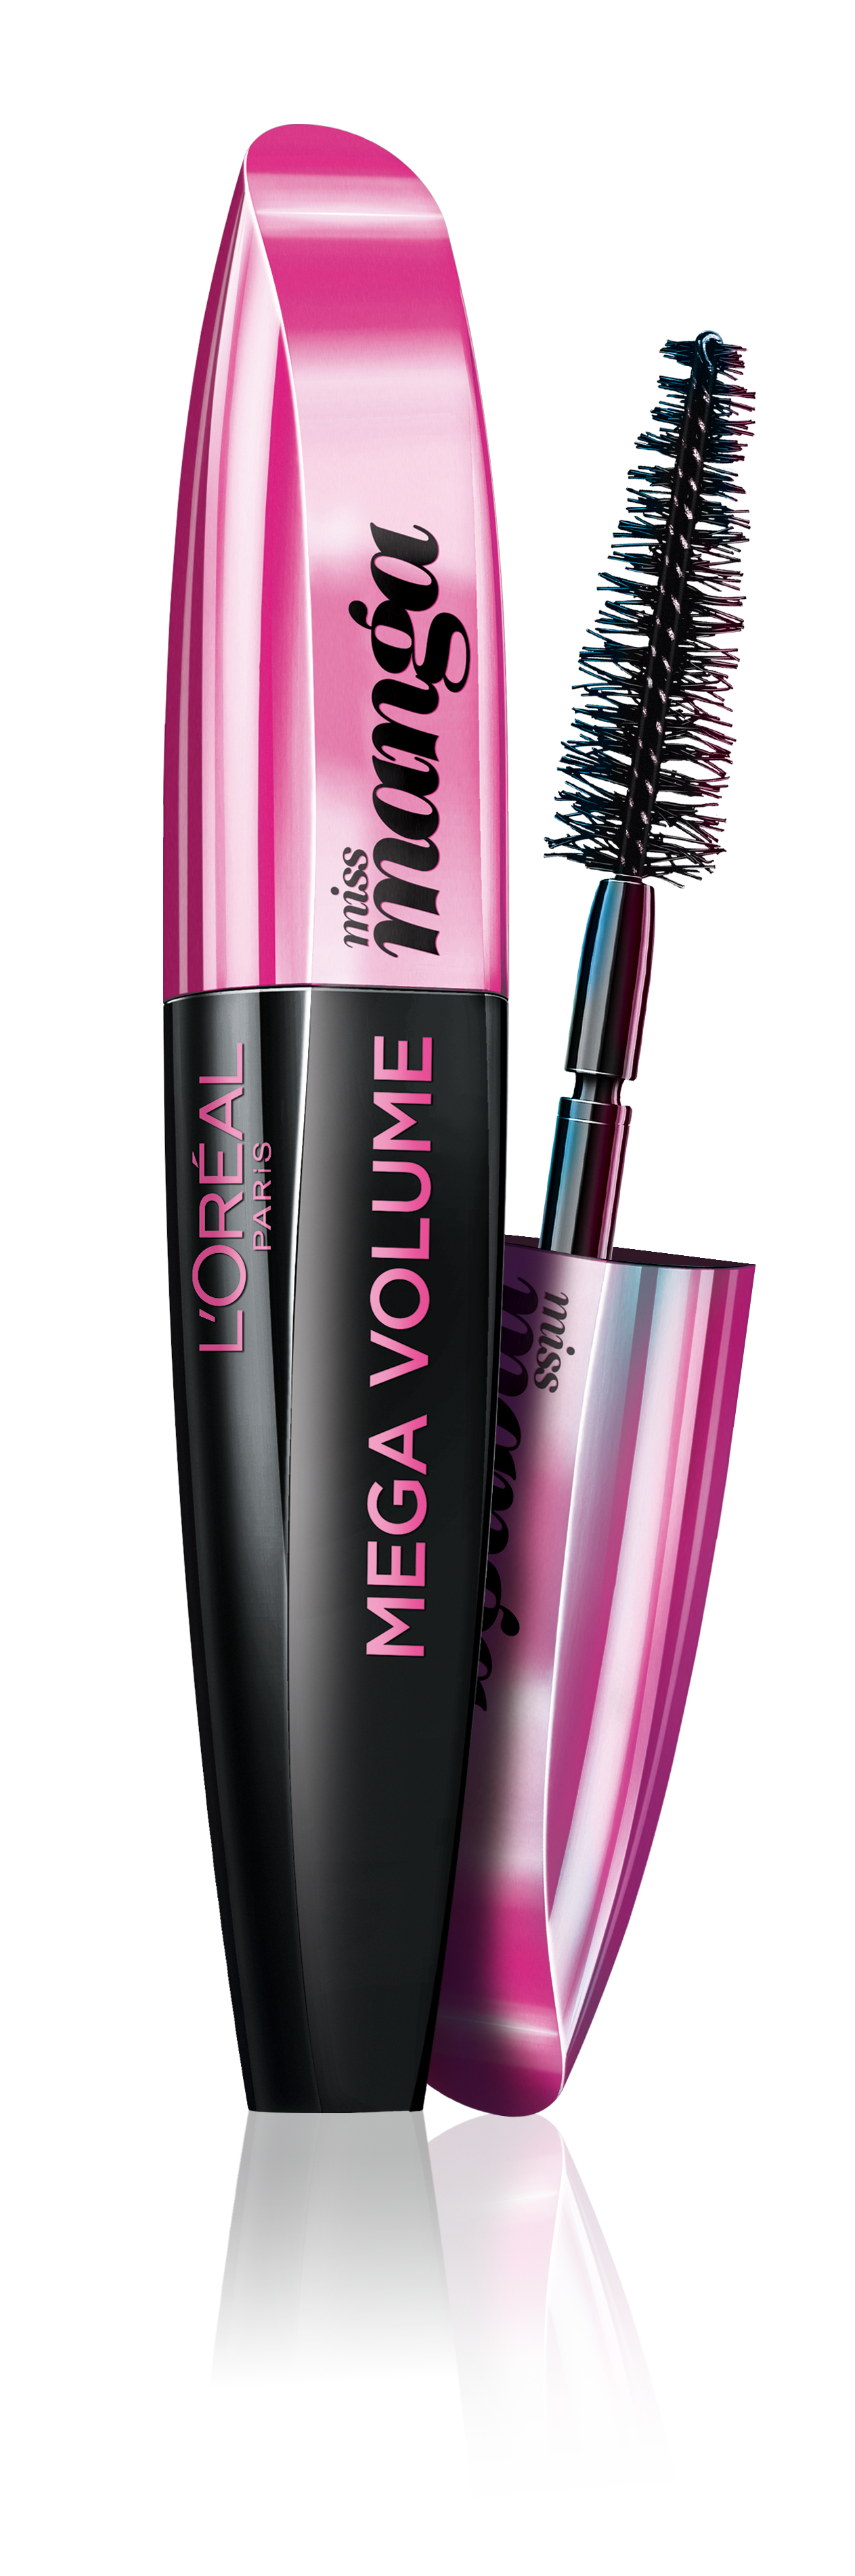 history class overseas Drug Store Makeup Review: L'Oreal Miss Manga Mega Volume Mascara - honey  medium beauty